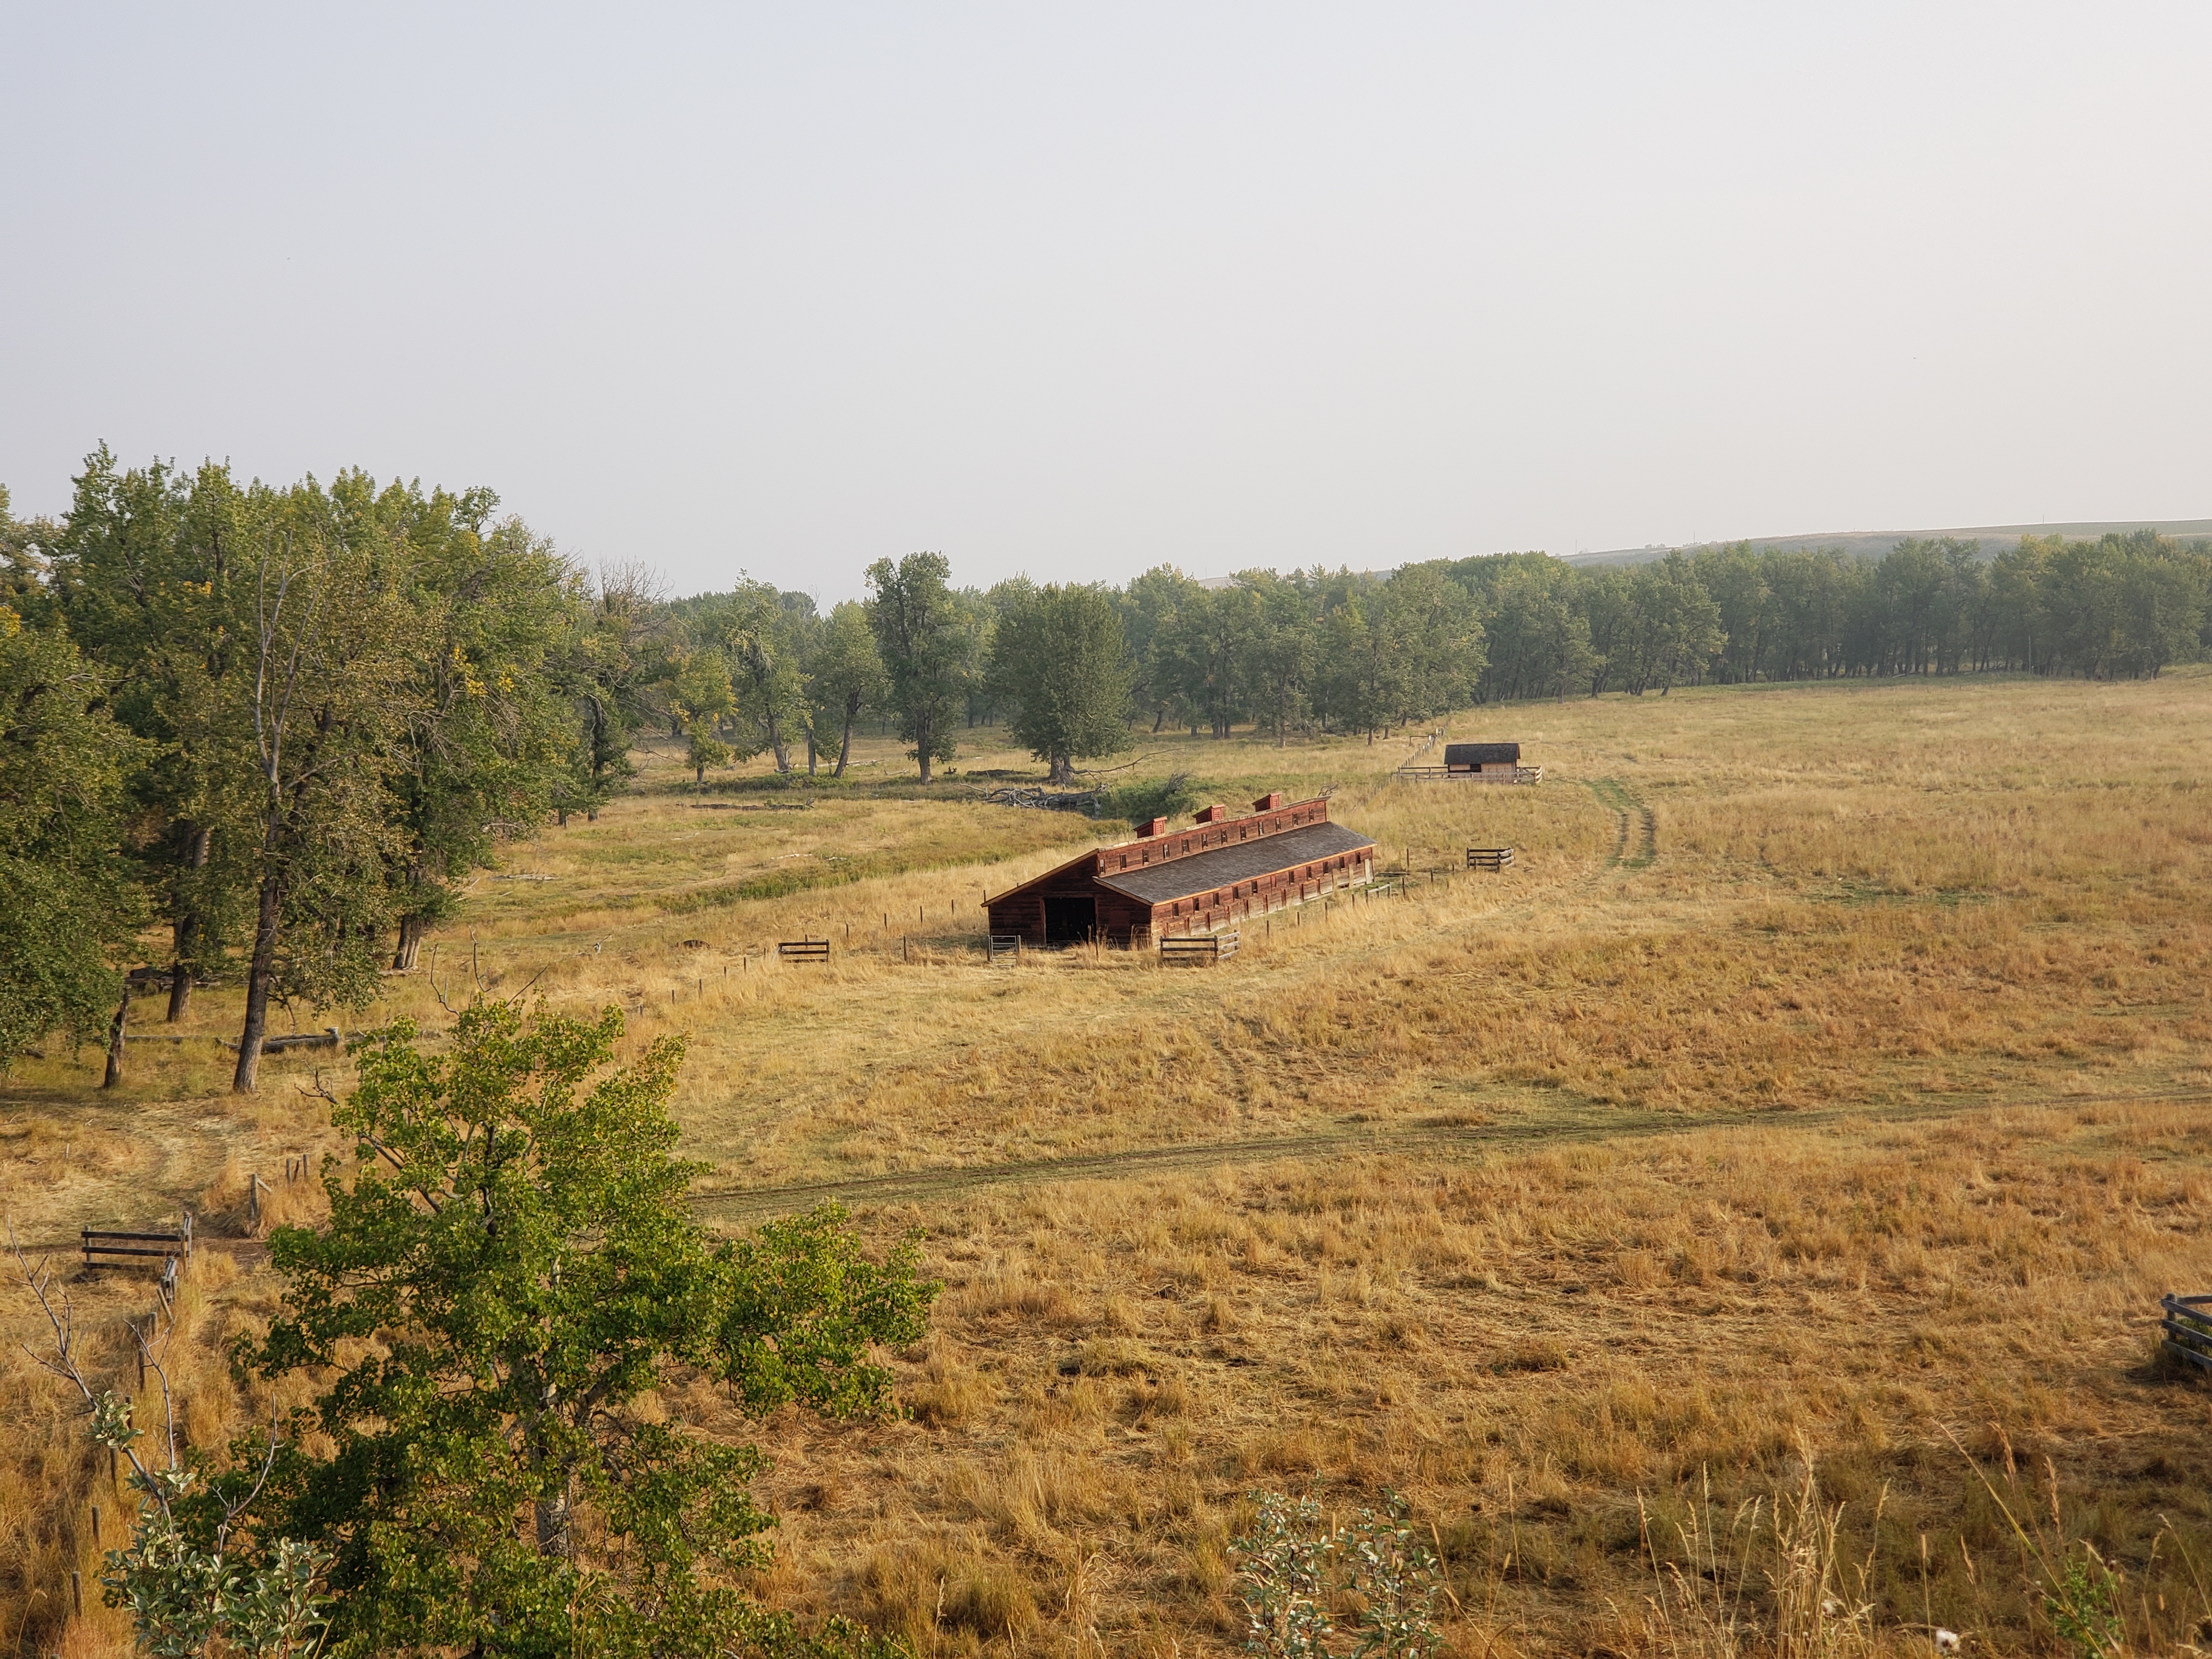 Piggery building in the landscape at Bar U Ranch, by Capture2Preserve Team September 2020.